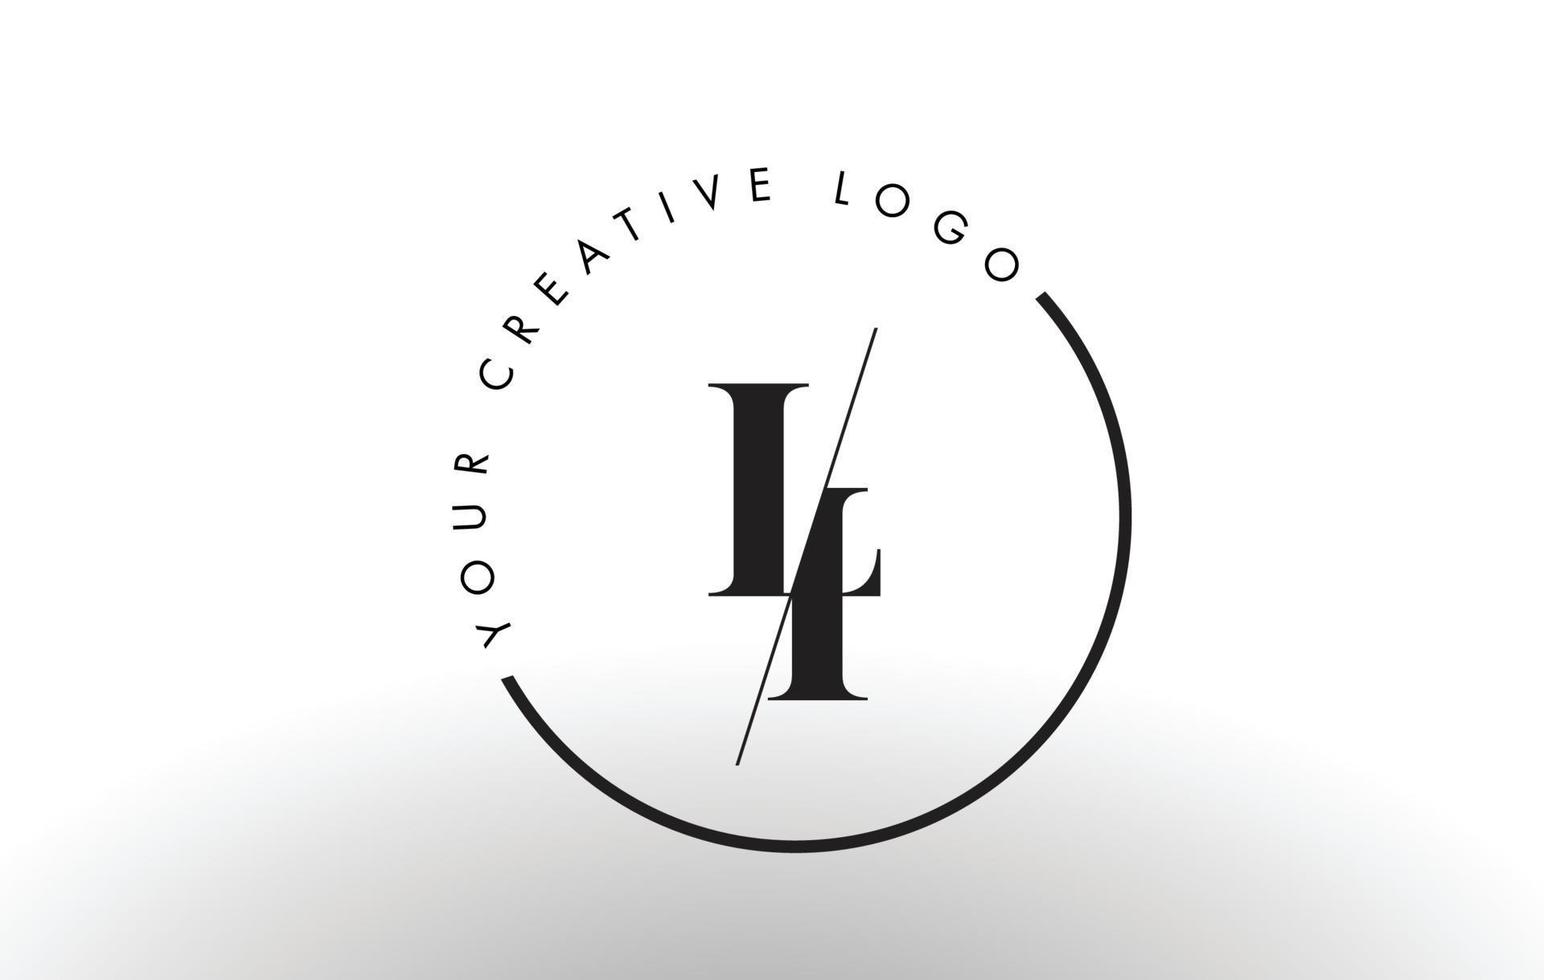 Diseño de logotipo de letra li serif con corte cruzado creativo. vector